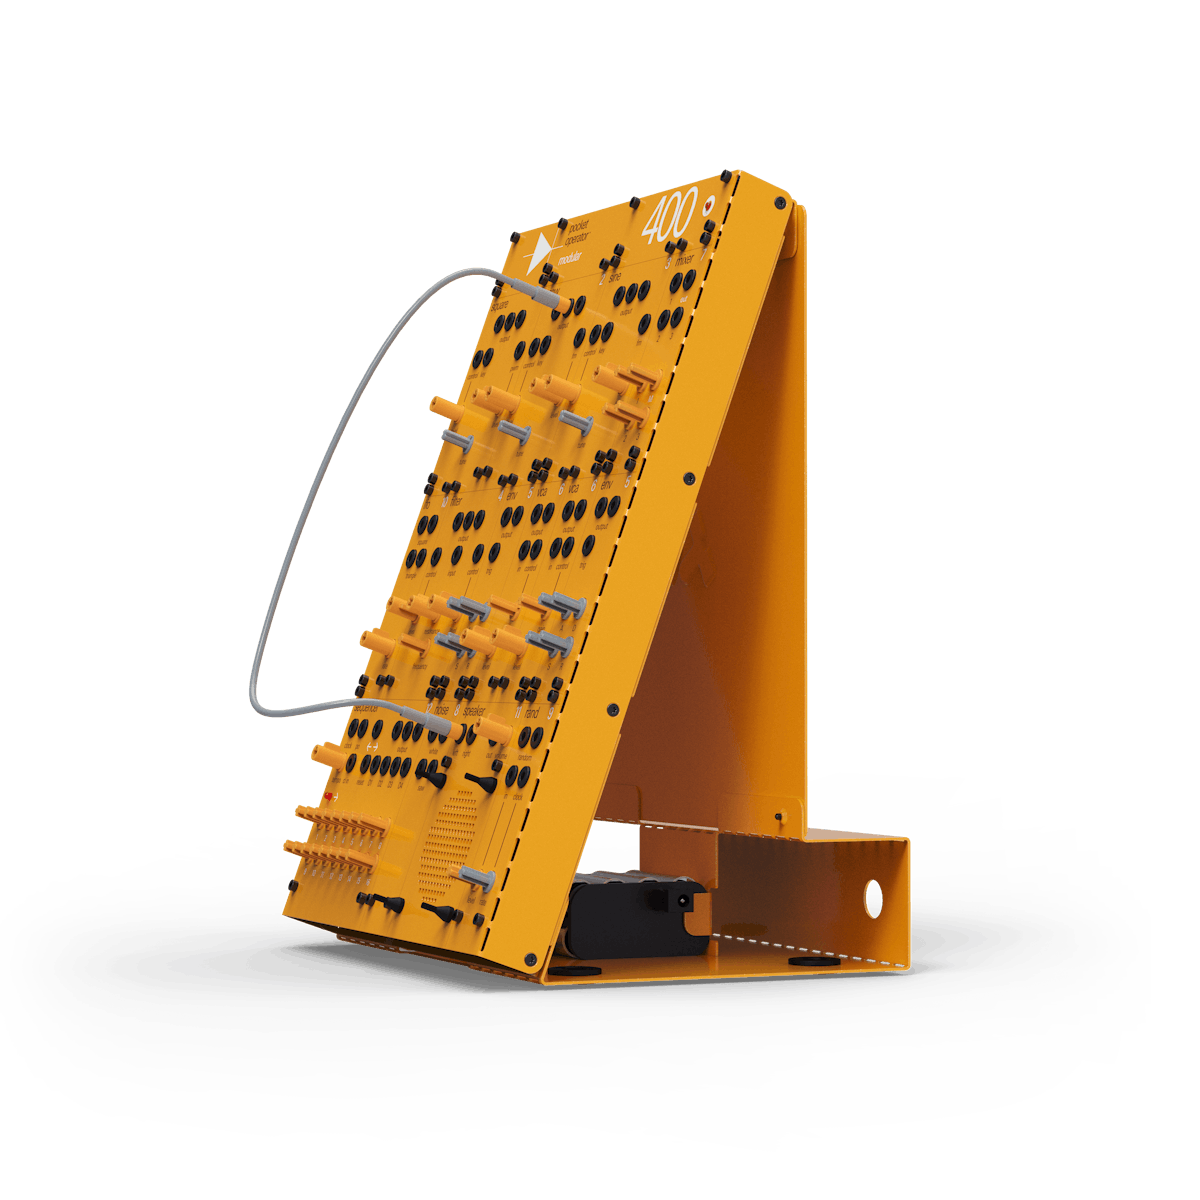 pocket operator modular 400 - teenage engineering